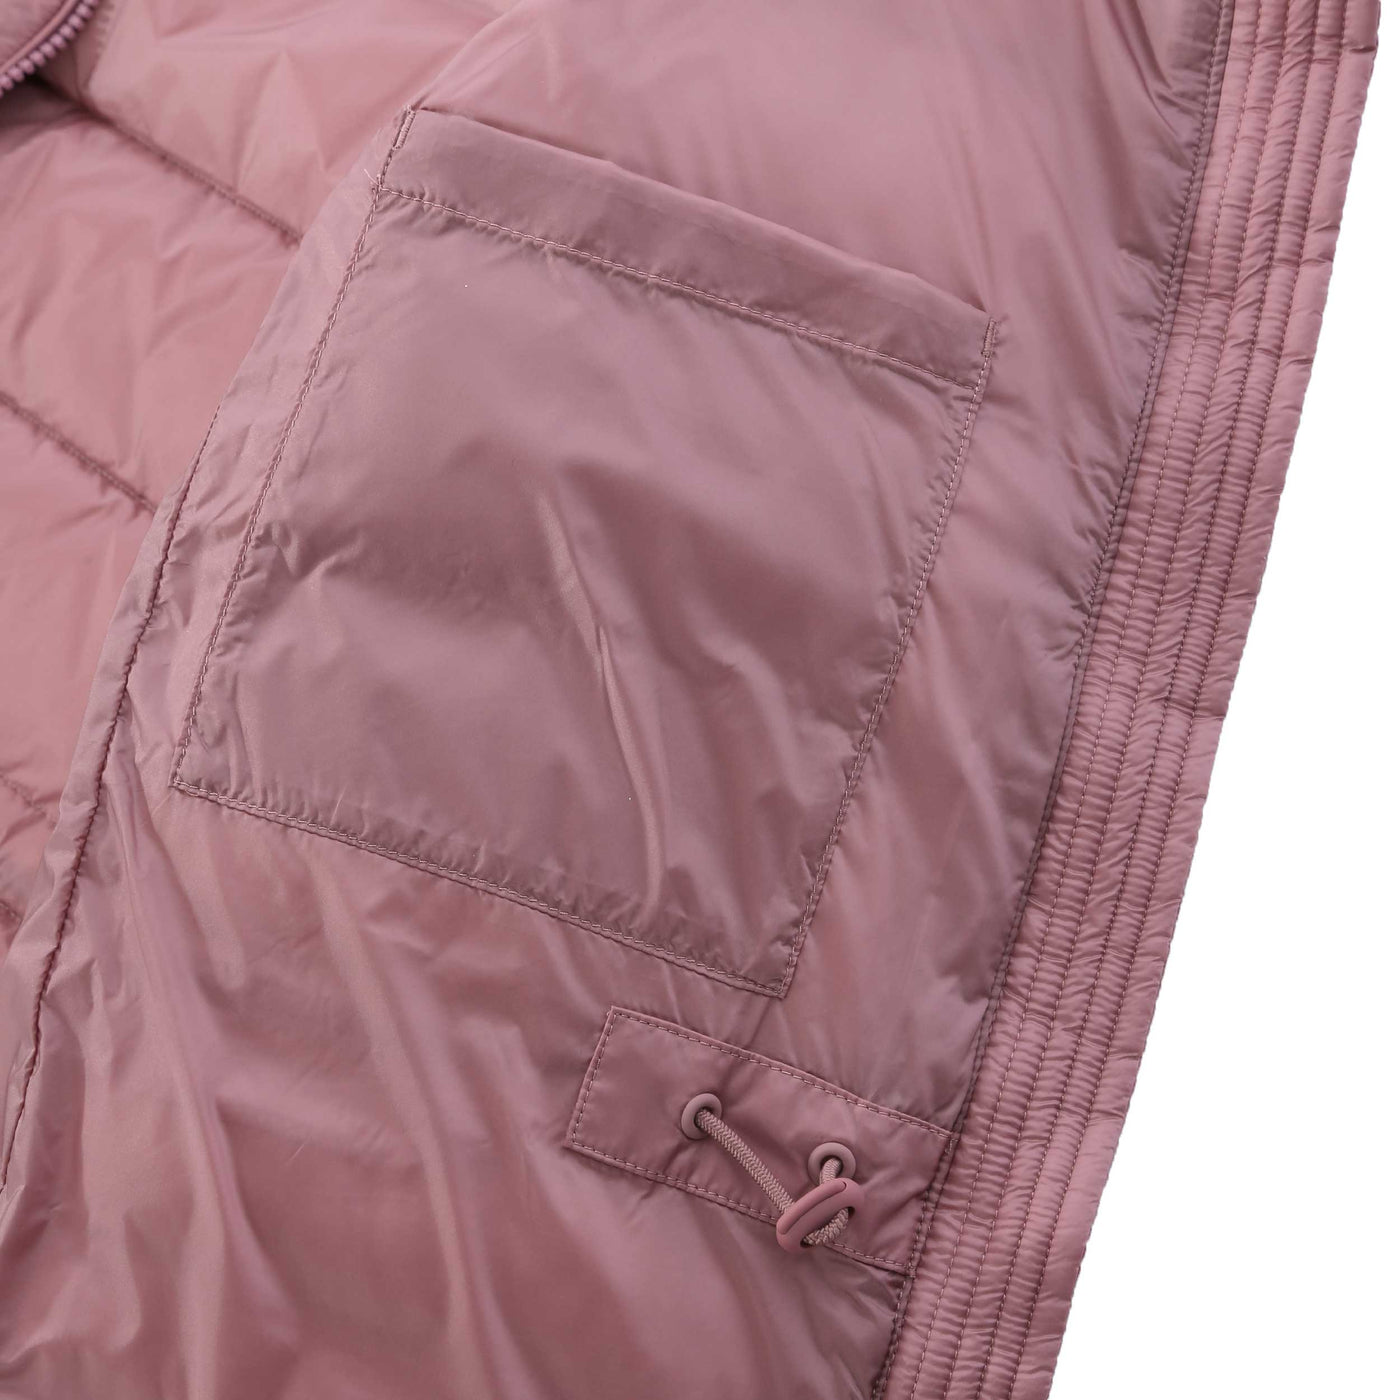 Belstaff Sepal Ladies Jacket in Rose Inside Toggle